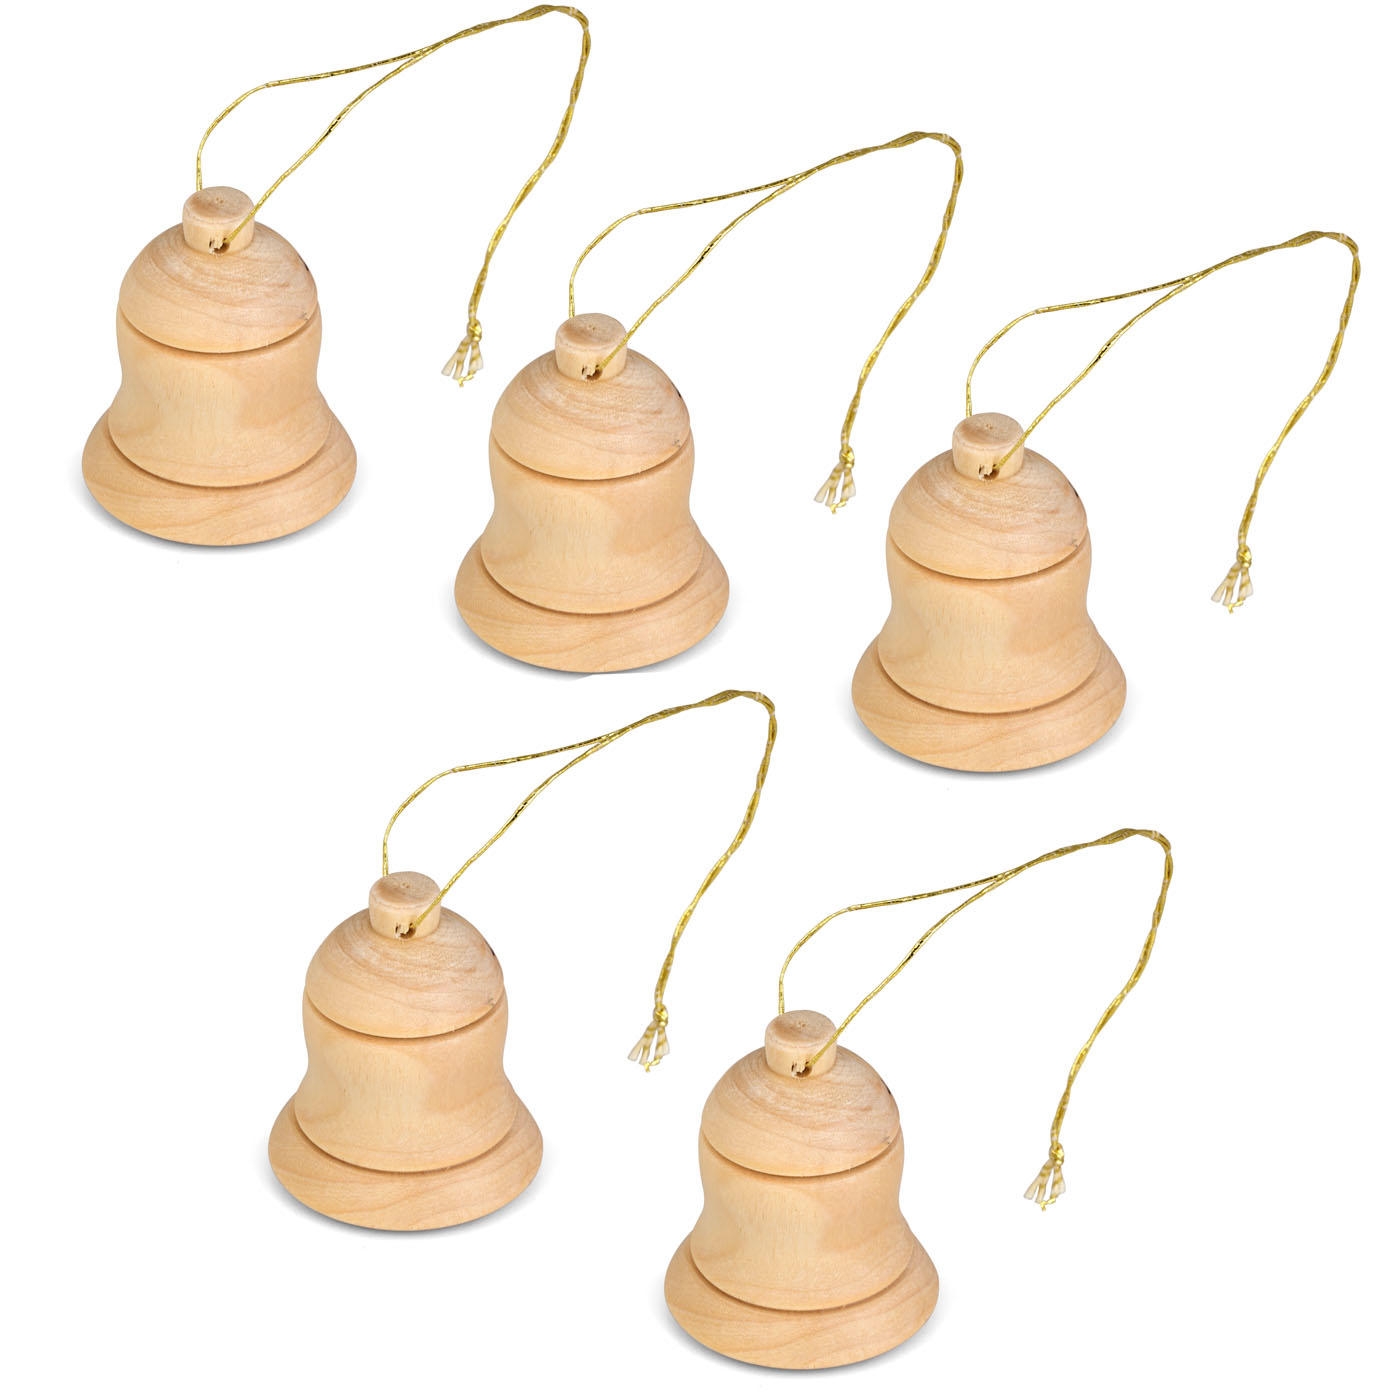 Olive Wood Miniature Bell Ornaments - Set of 5 - 1